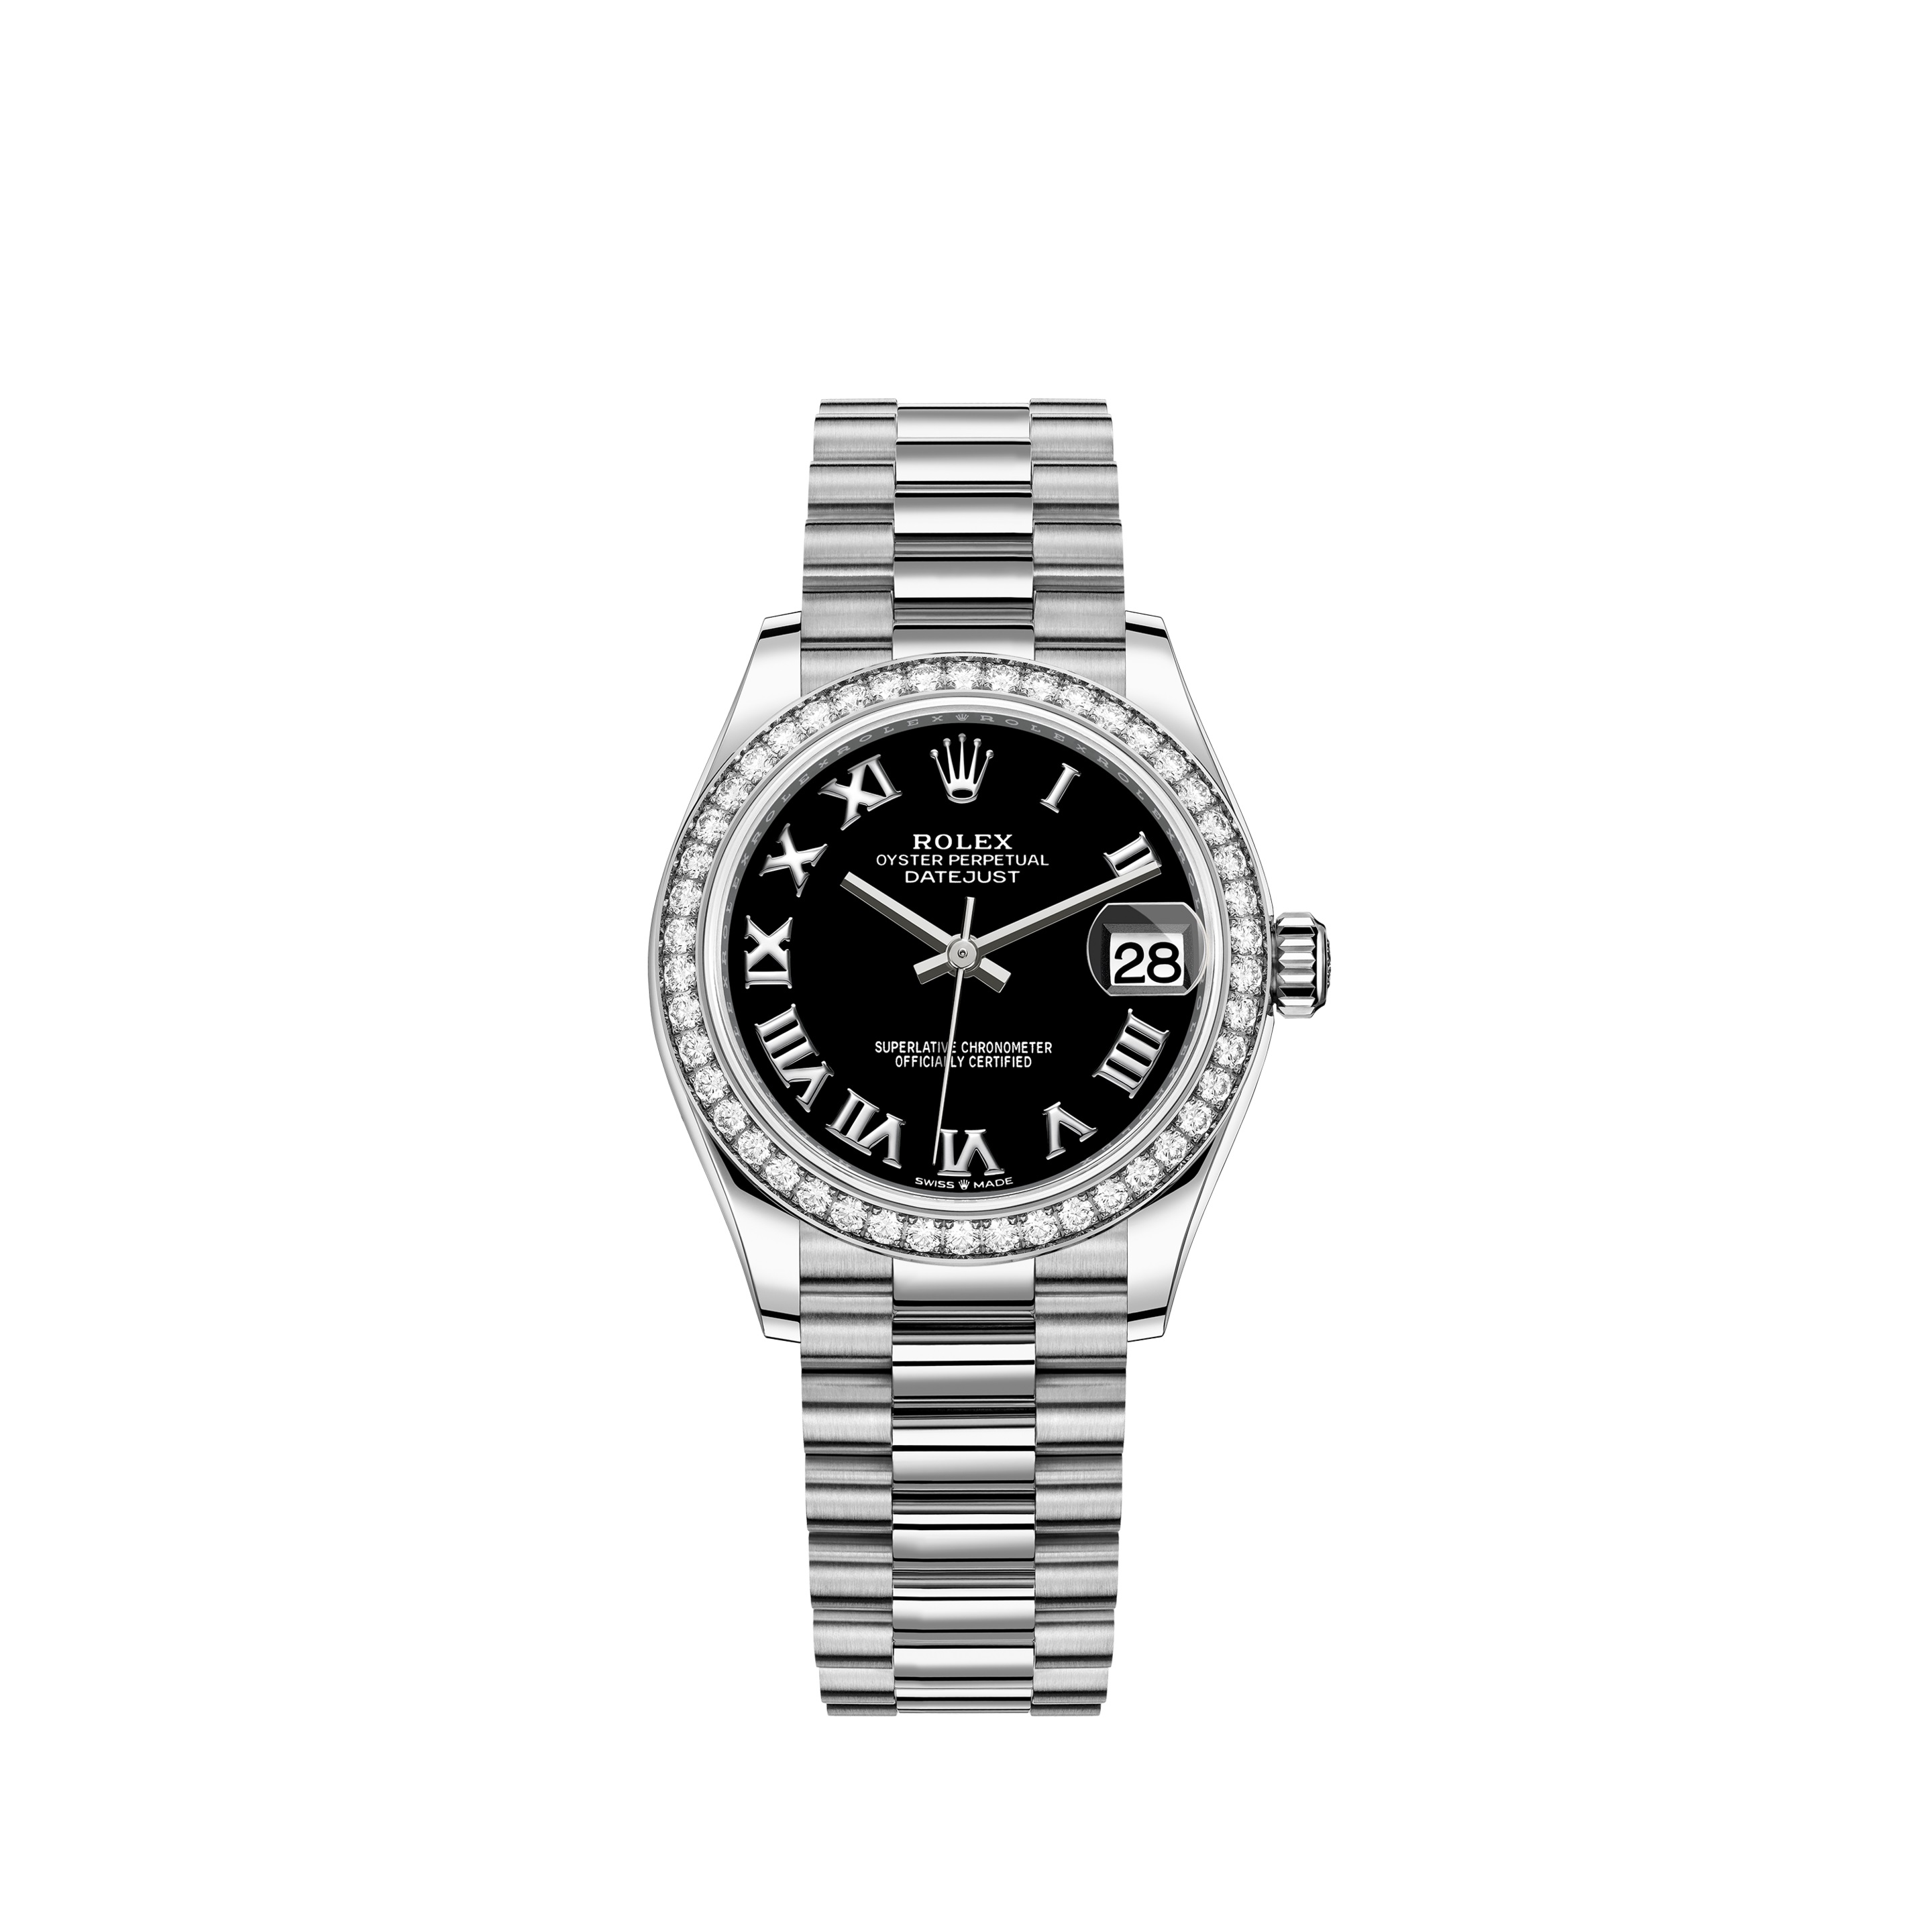 Datejust 31 278289RBR White Gold Watch (Bright Black)